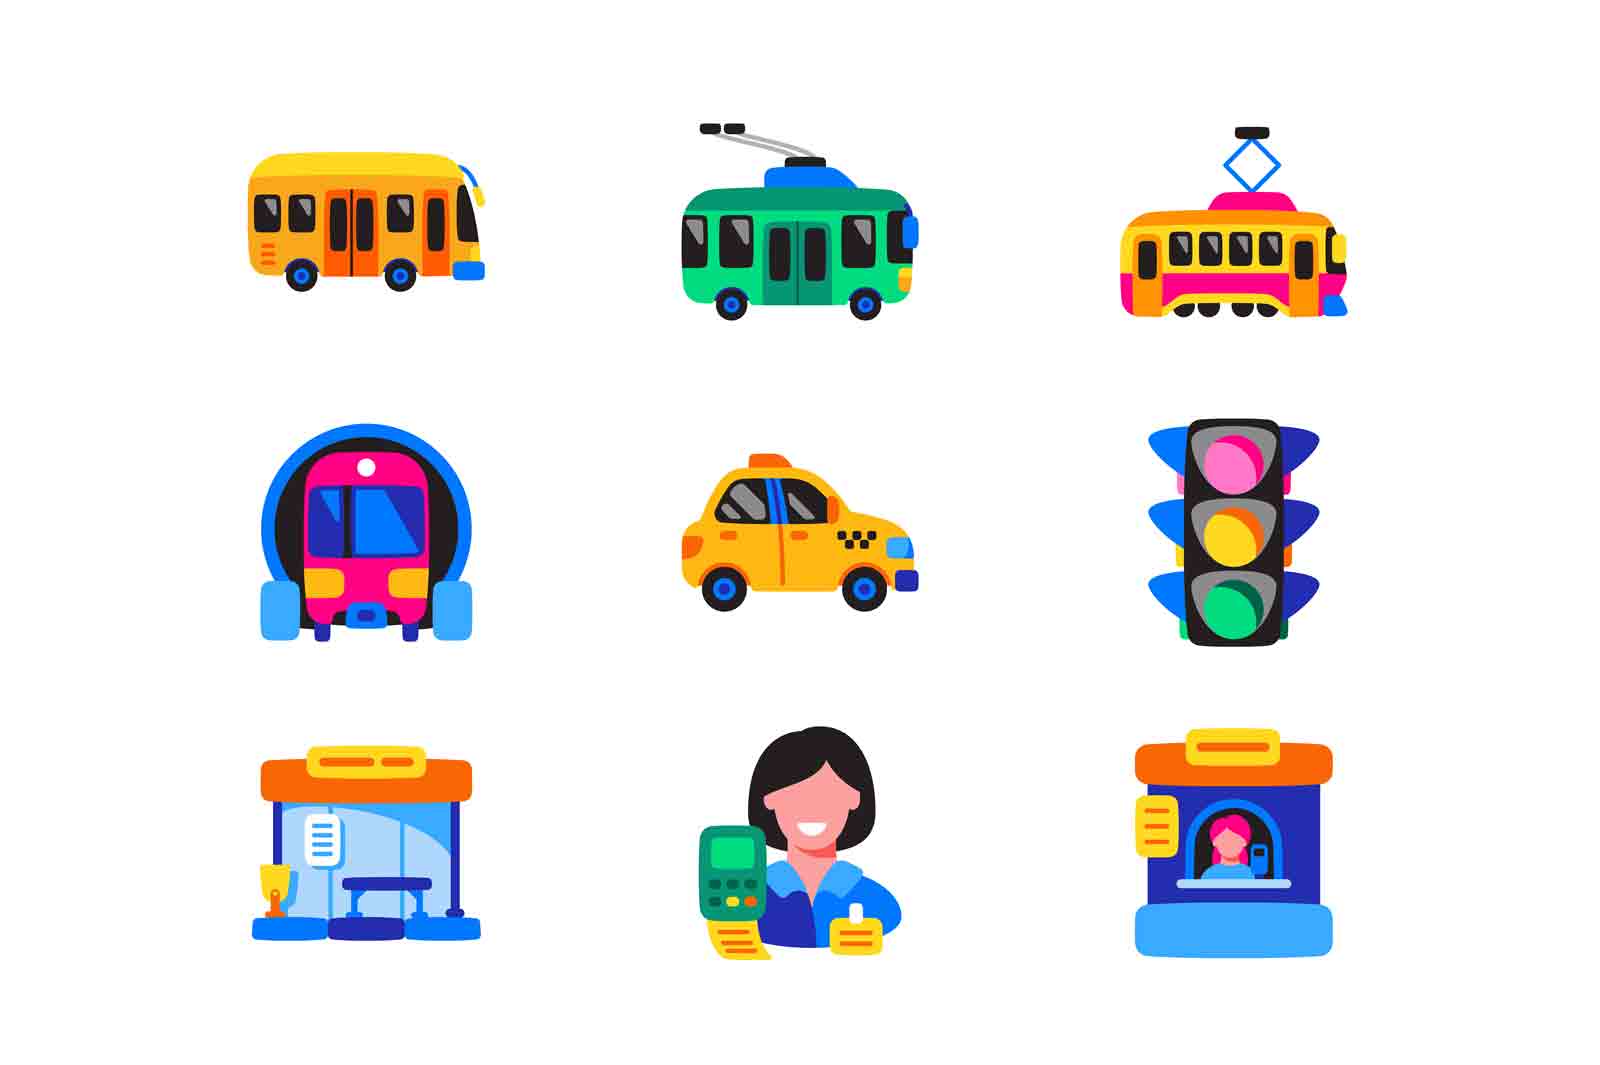 Public transport icons set vector illustration. Bus, tram, trolley-bus, train and conductor symbols. Transportation flat concept